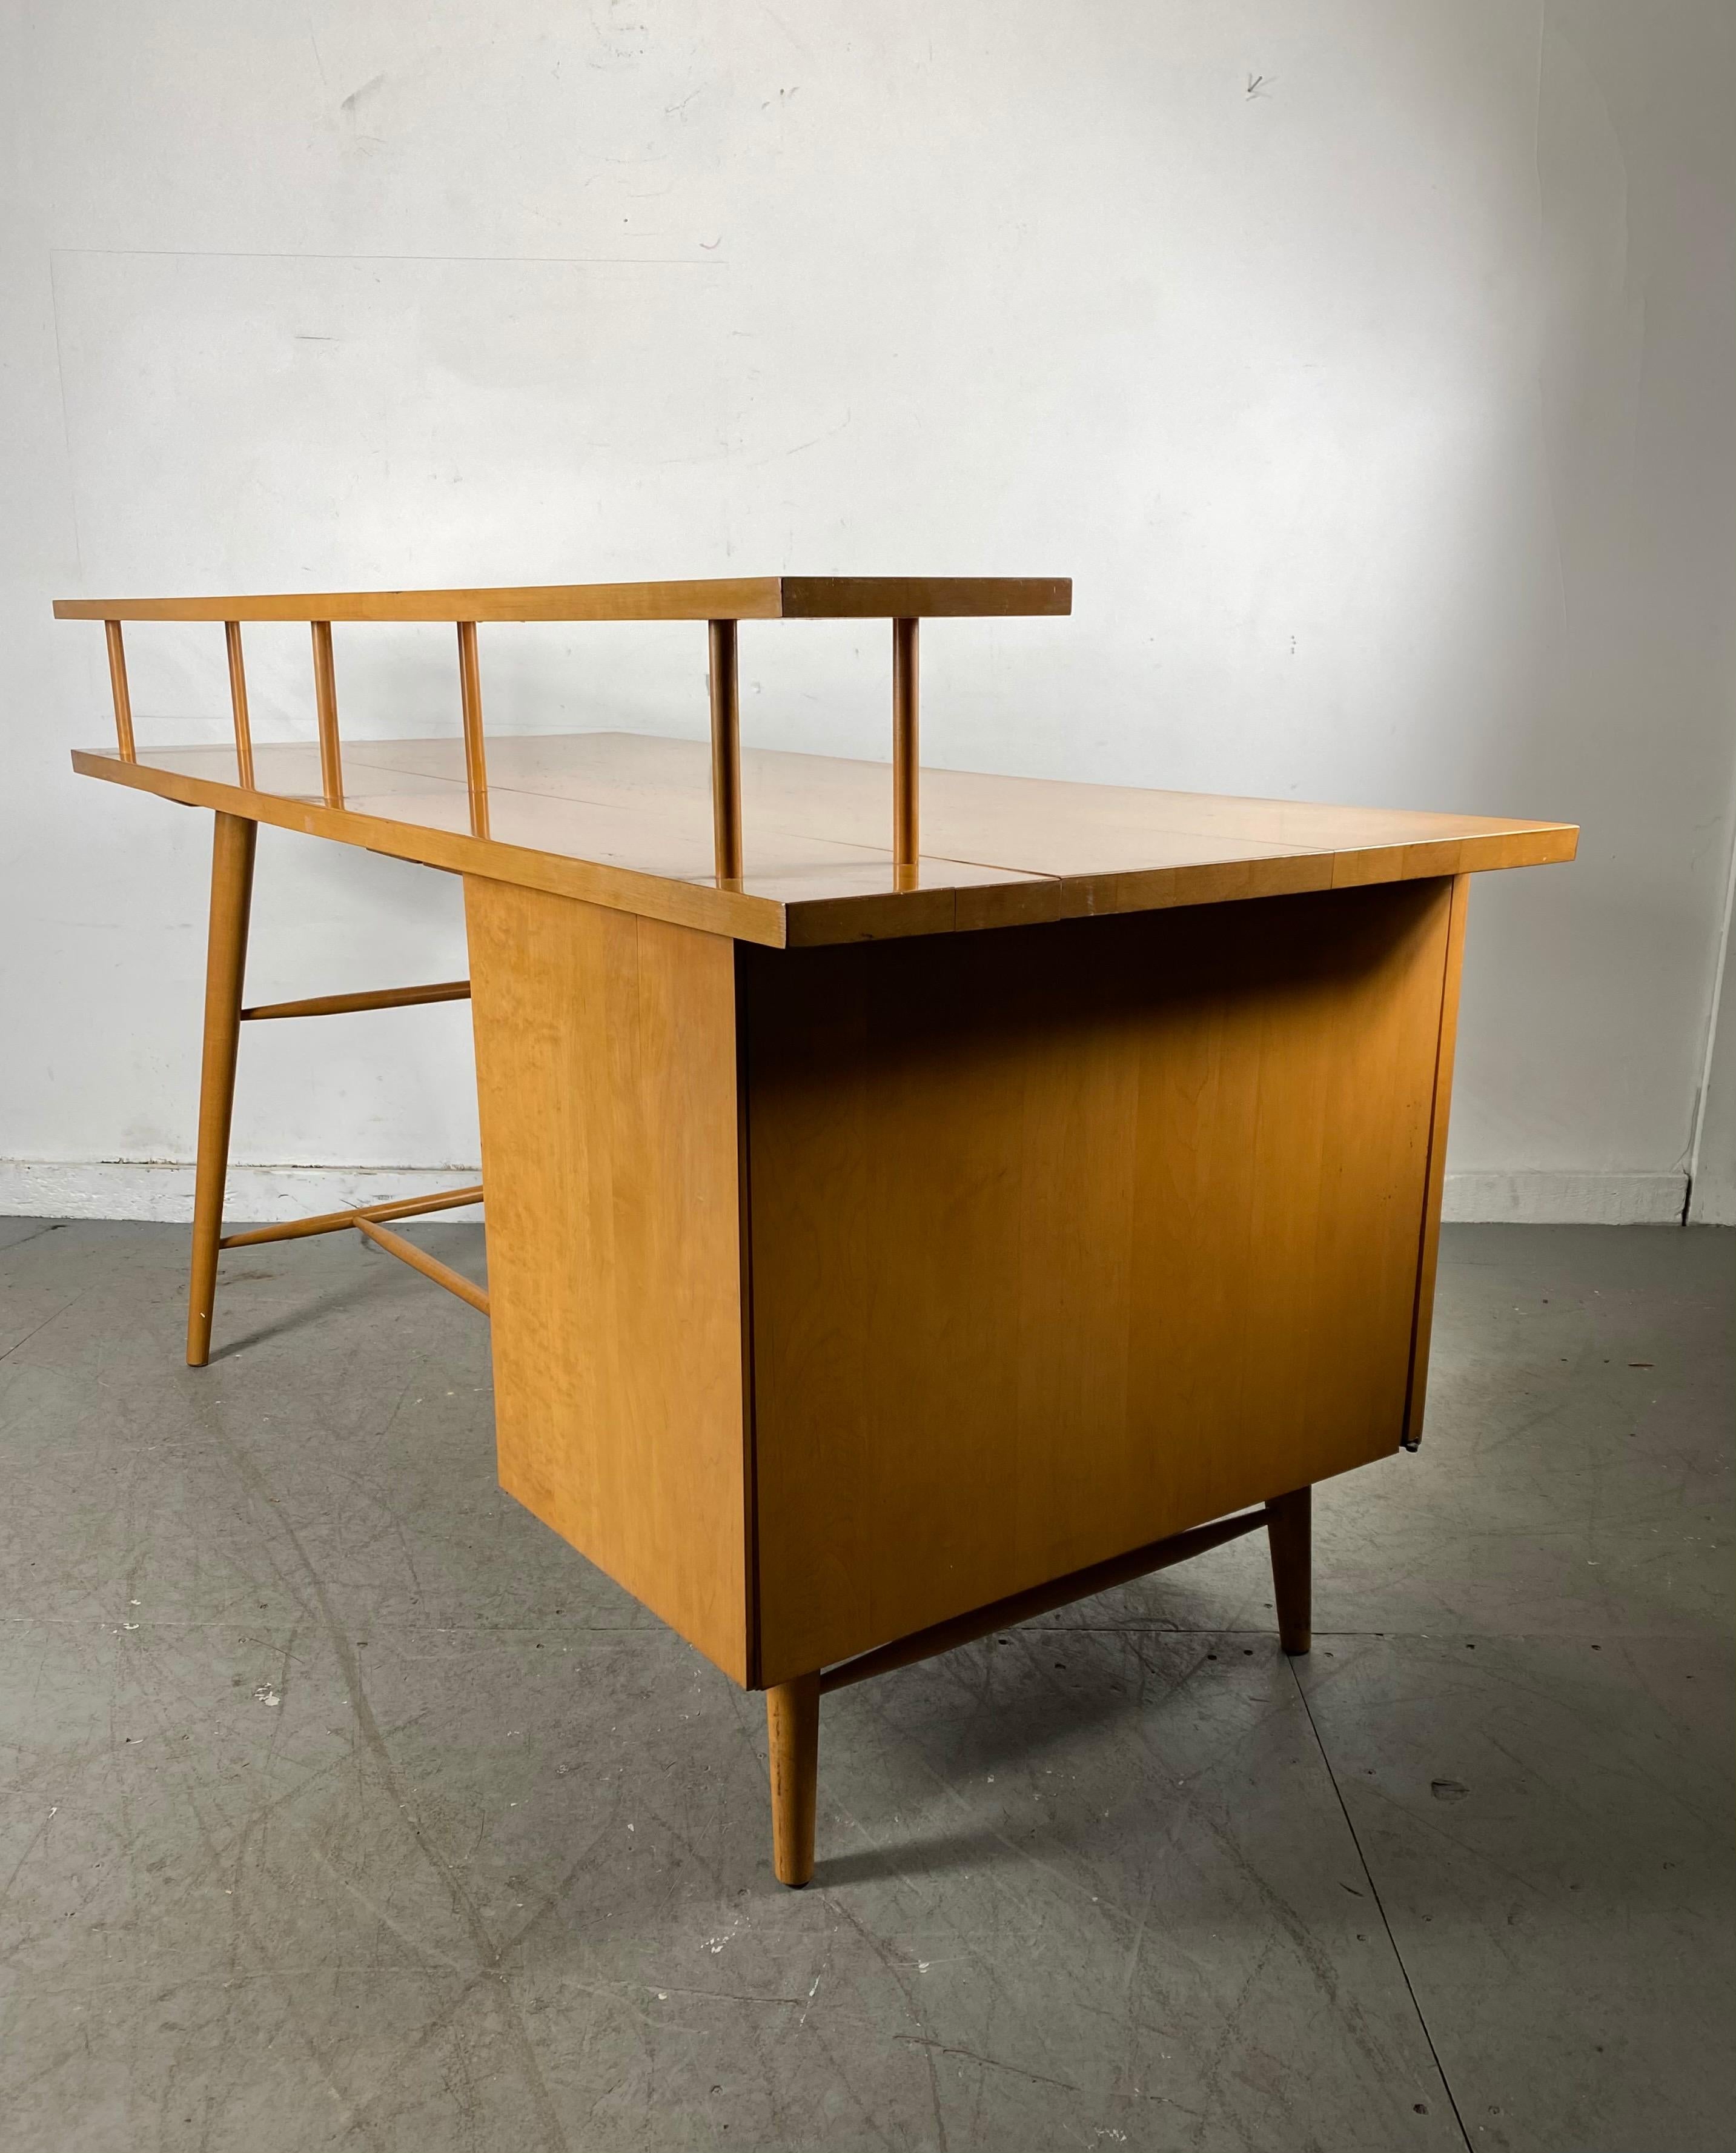 Rare Paul McCobb Desk in Maple, 1950s, Multi-Level, Classic Modernist Design 2